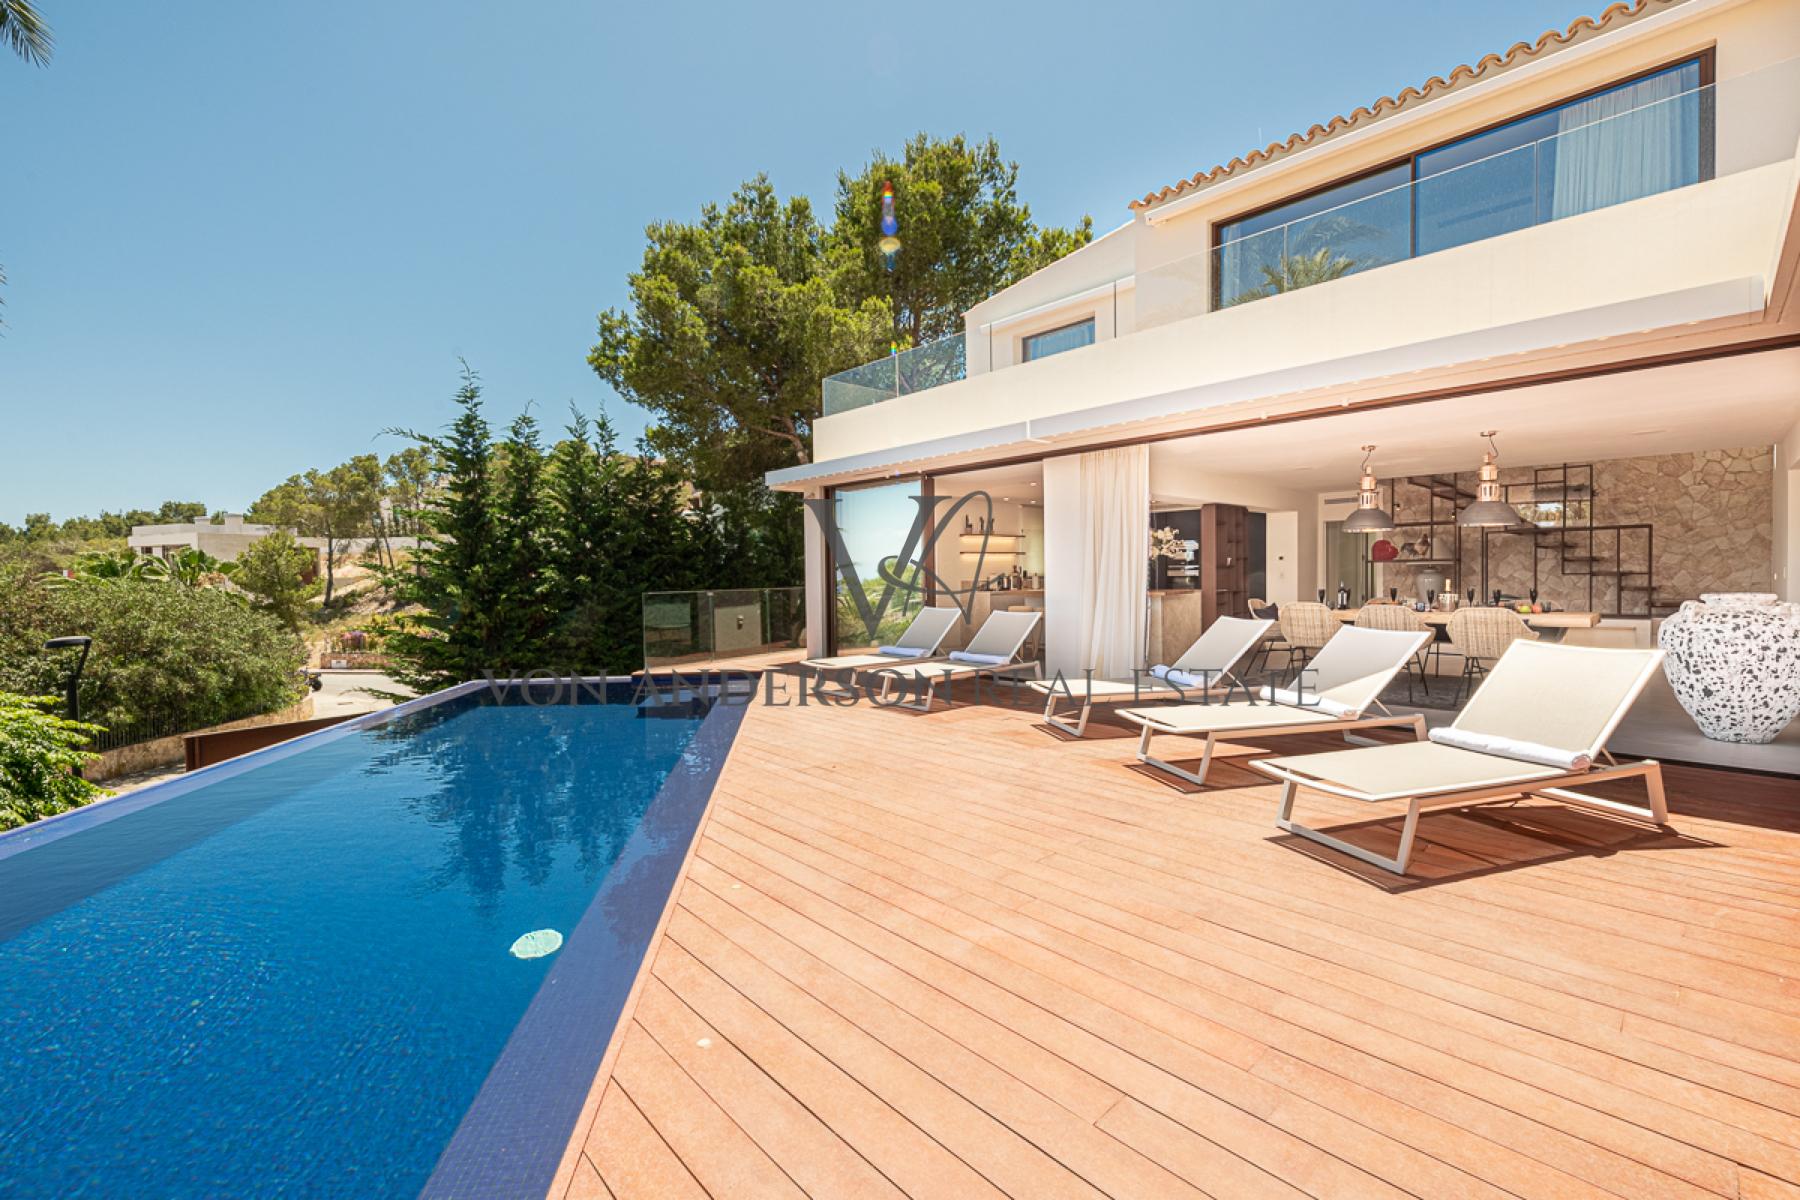 Exquisite Modern Villa with Super Views and Full Tourist License, ref. VA1008, for sale in Ibiza by Von Anderson Real Estate